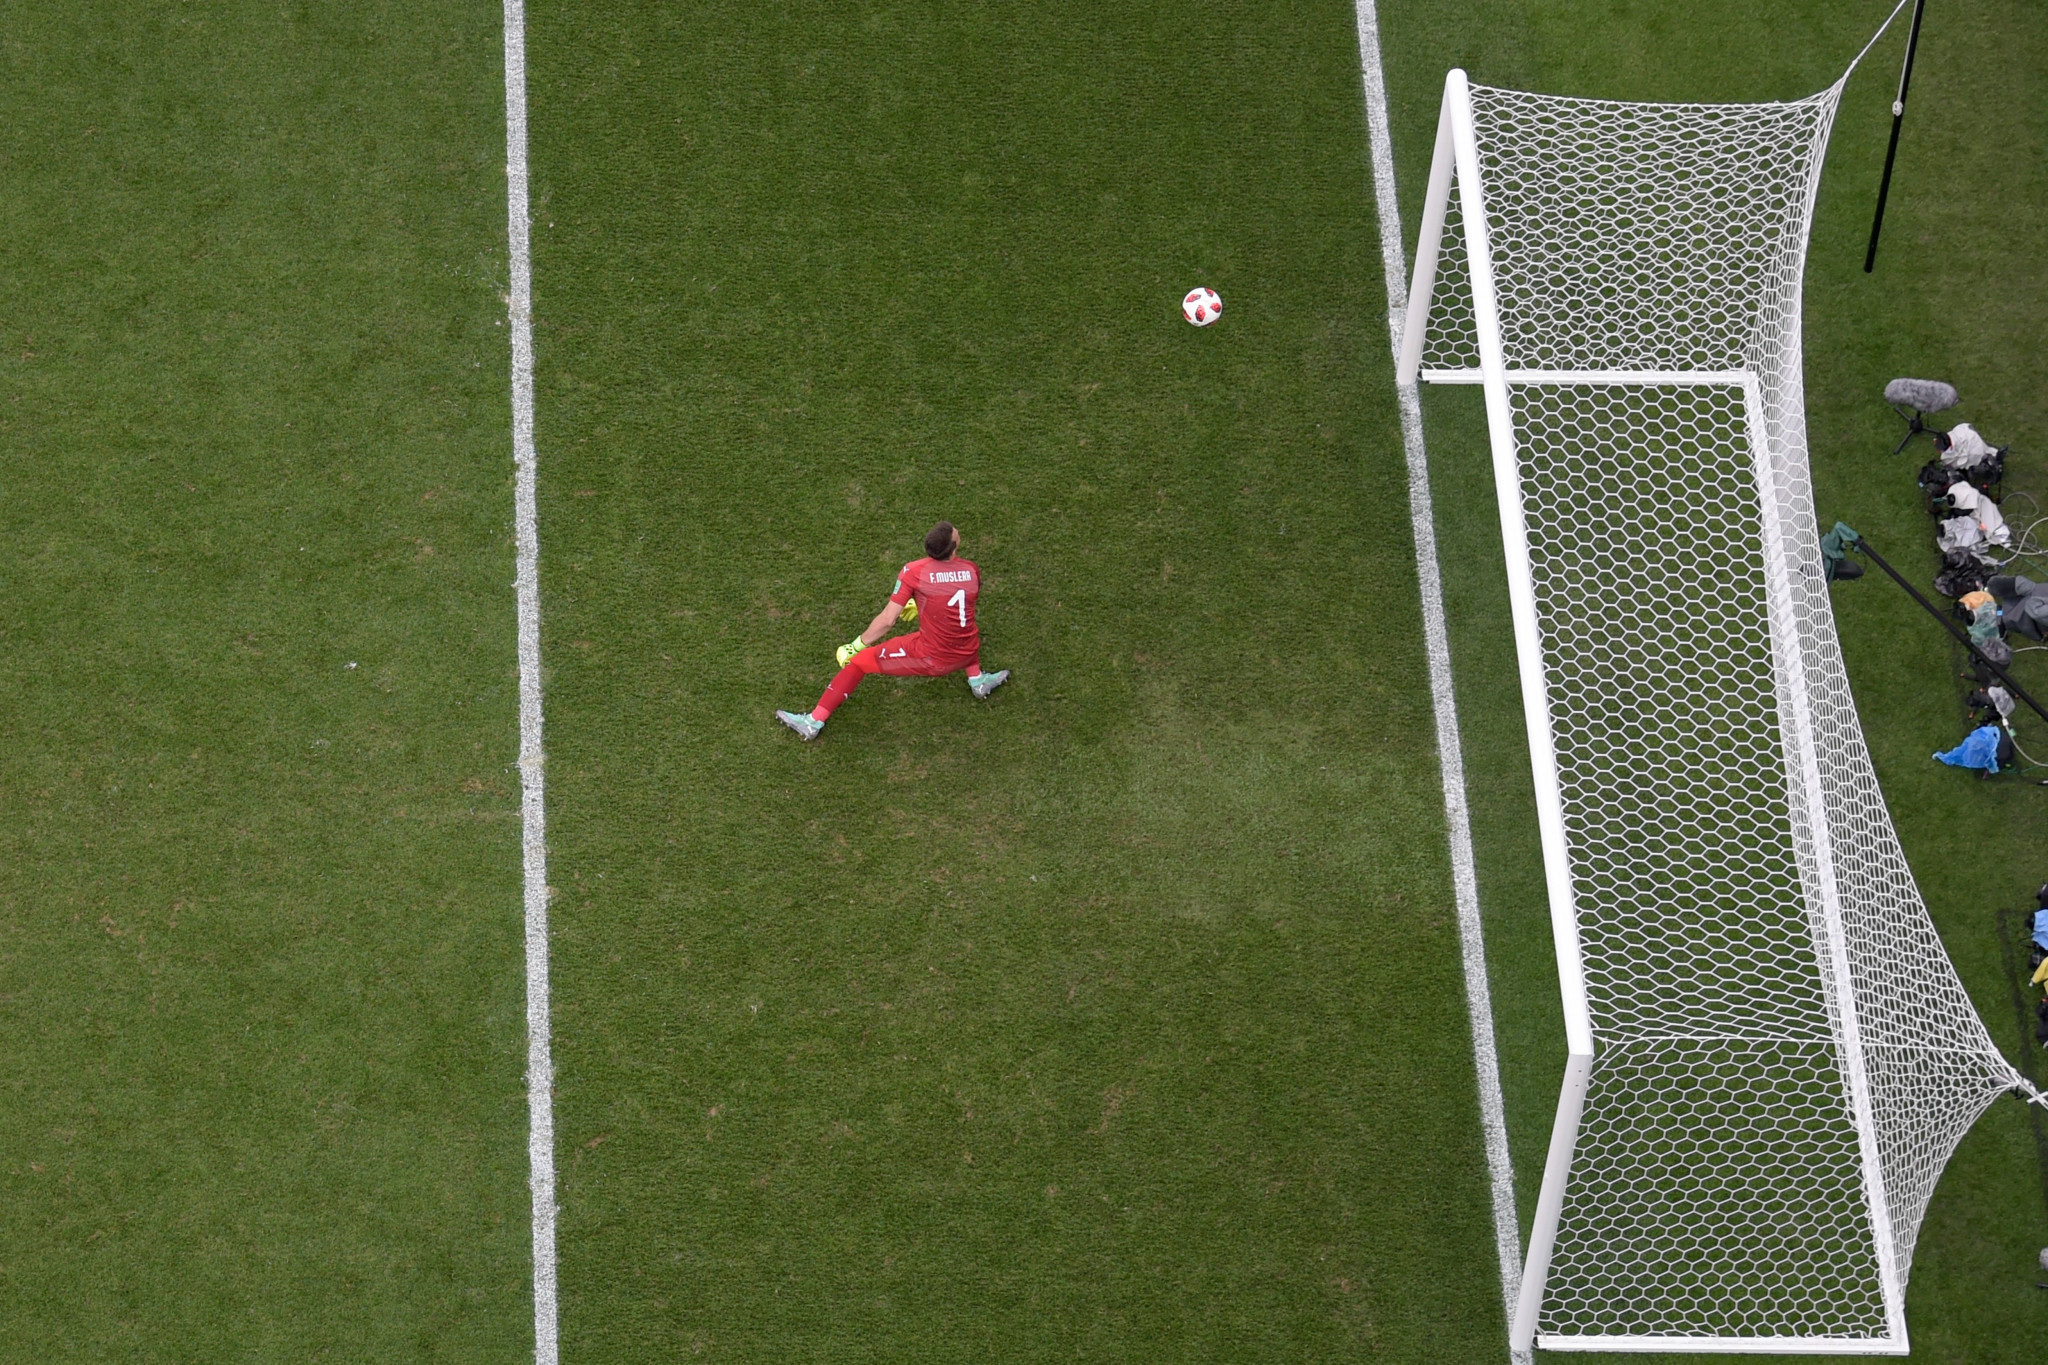 An error by Uruguay goalkeeper Fernando Muslera handed France their second goal ©Getty Images